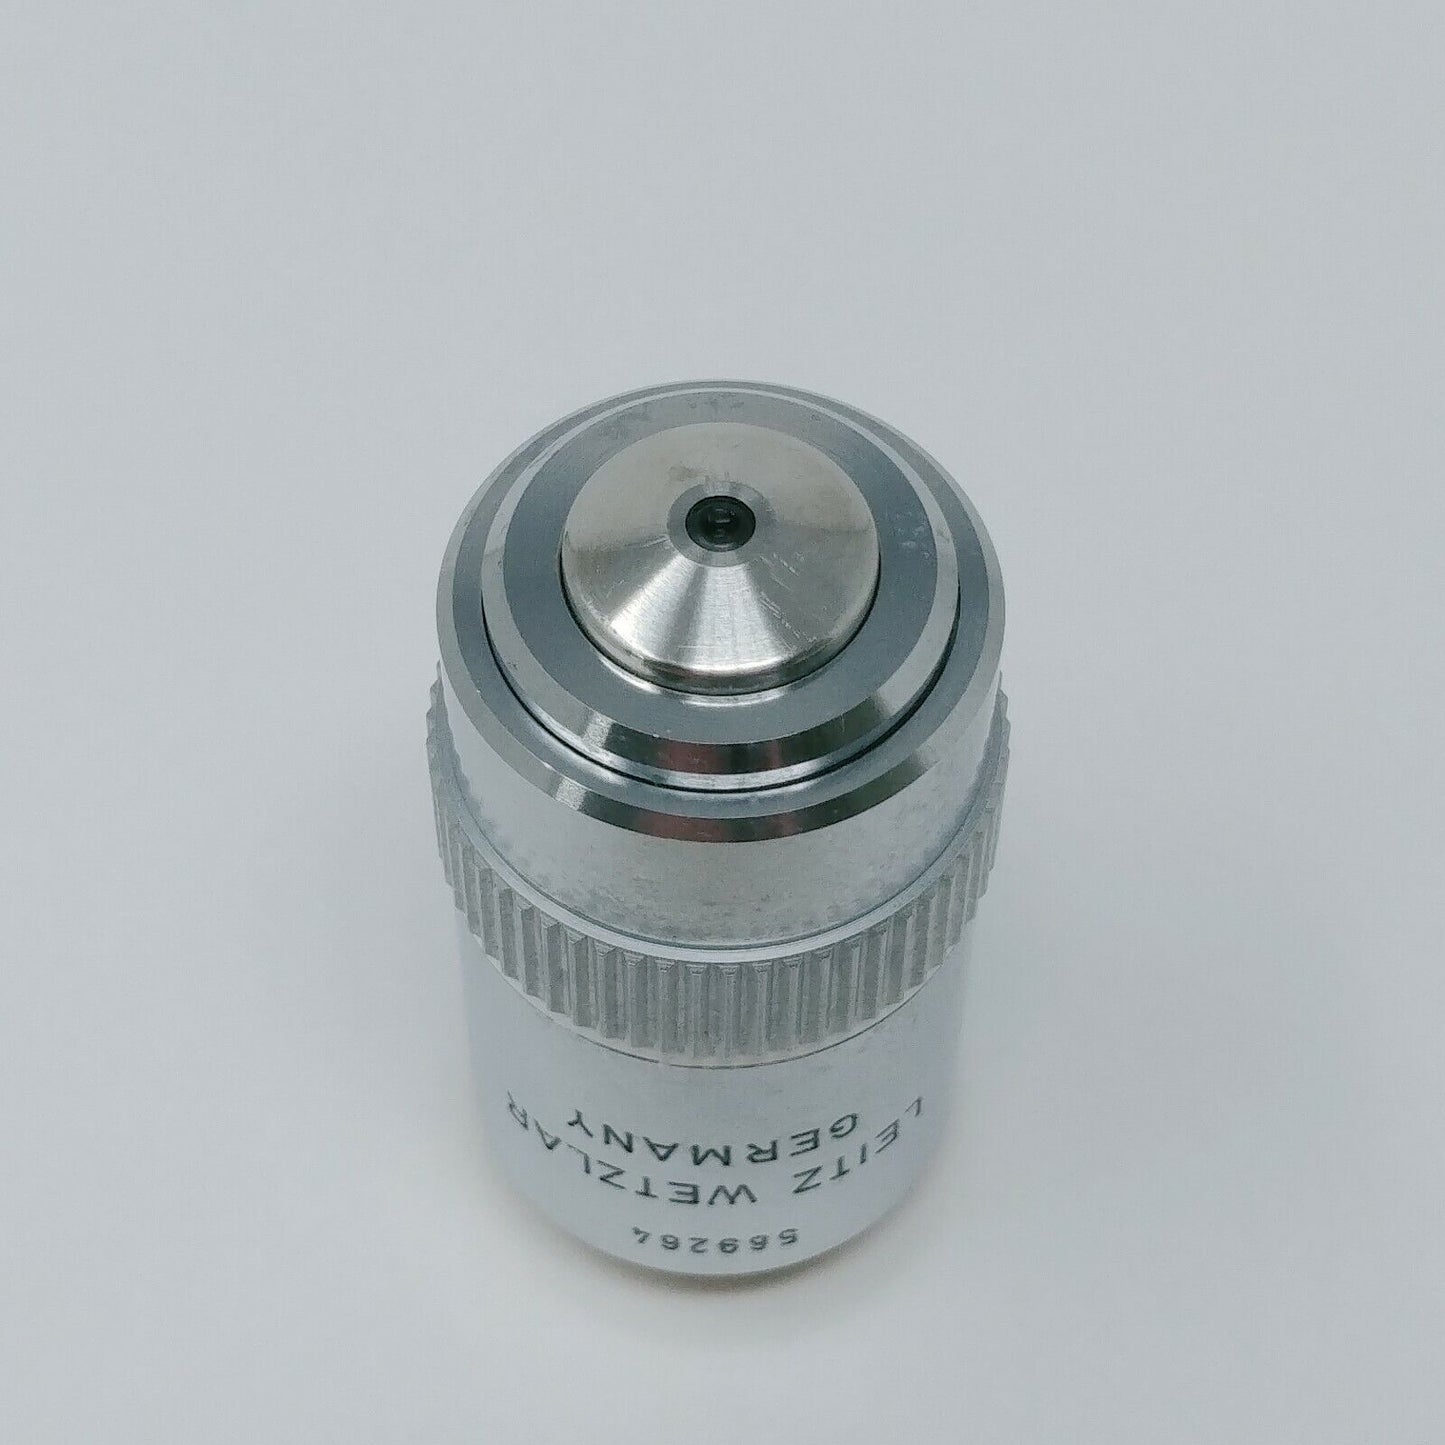 Leitz Microscope Objective Pl APO 125x 569264 - microscopemarketplace